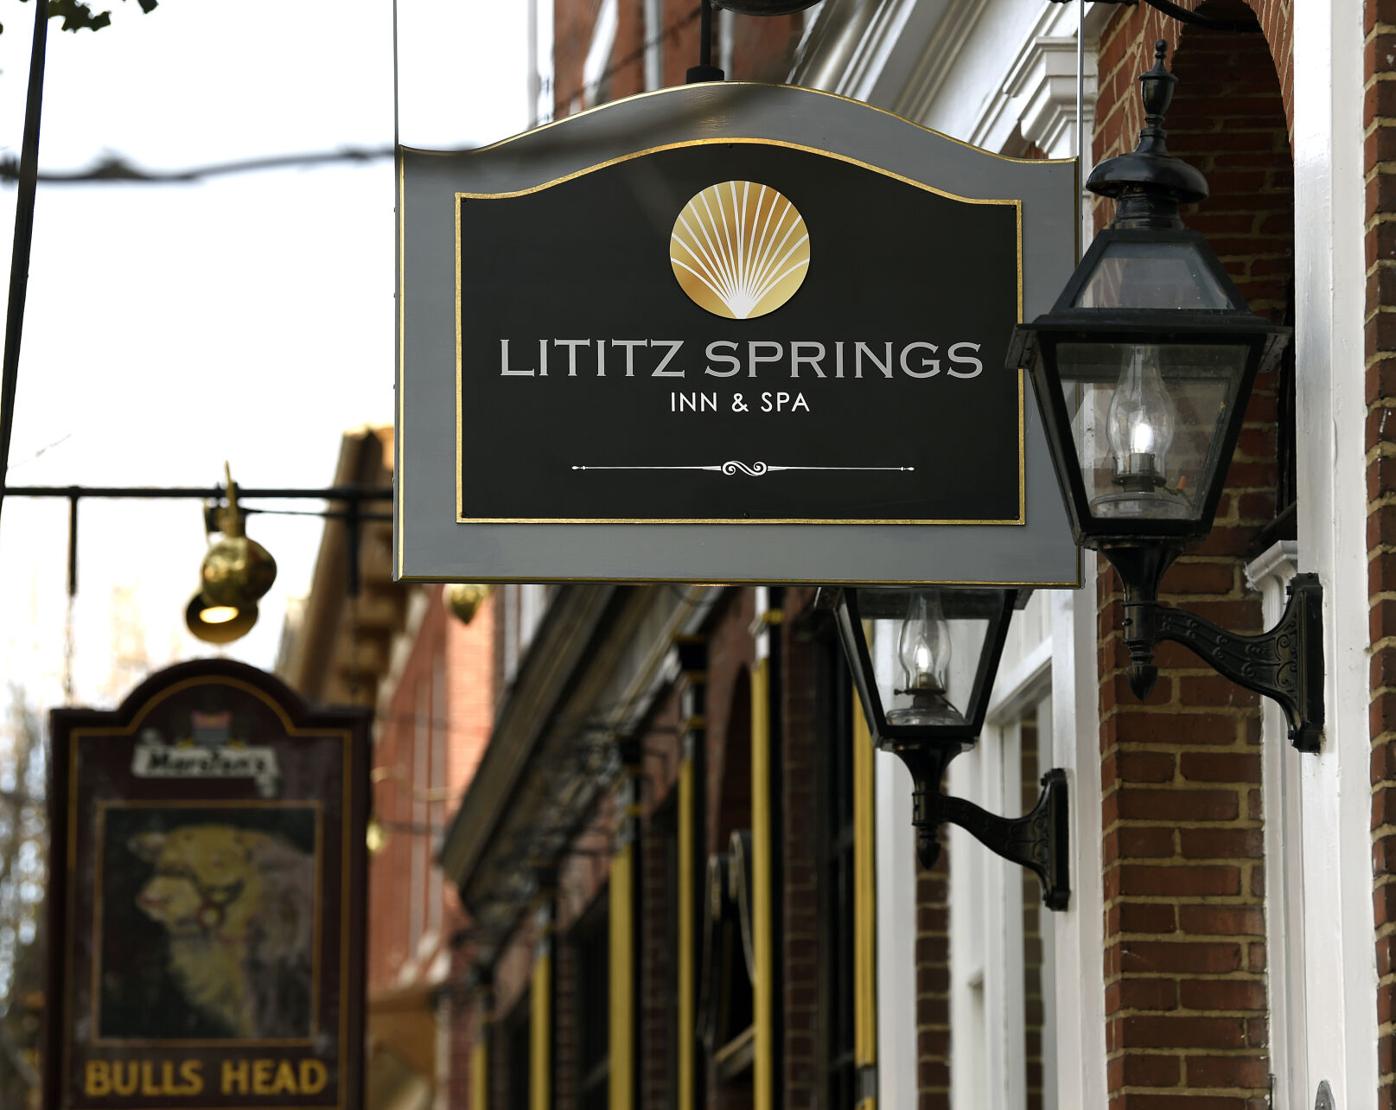 Lititz Springs Inn and Spa